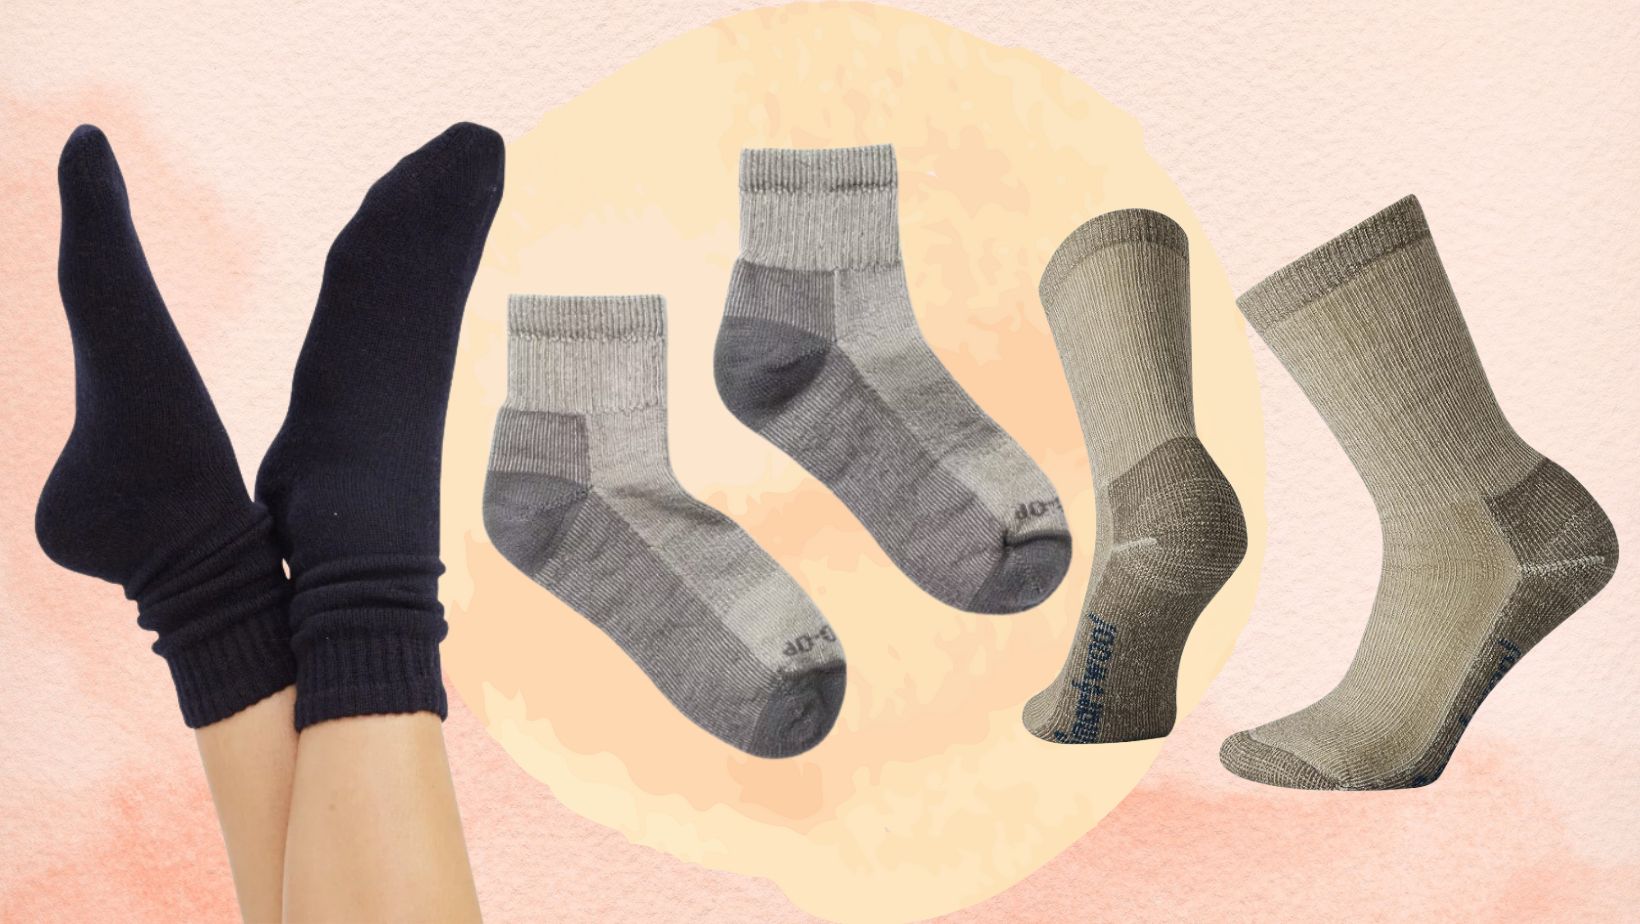 Ketanji Brown Jackson's Husband's Socks: Where to Buy | The Strategist